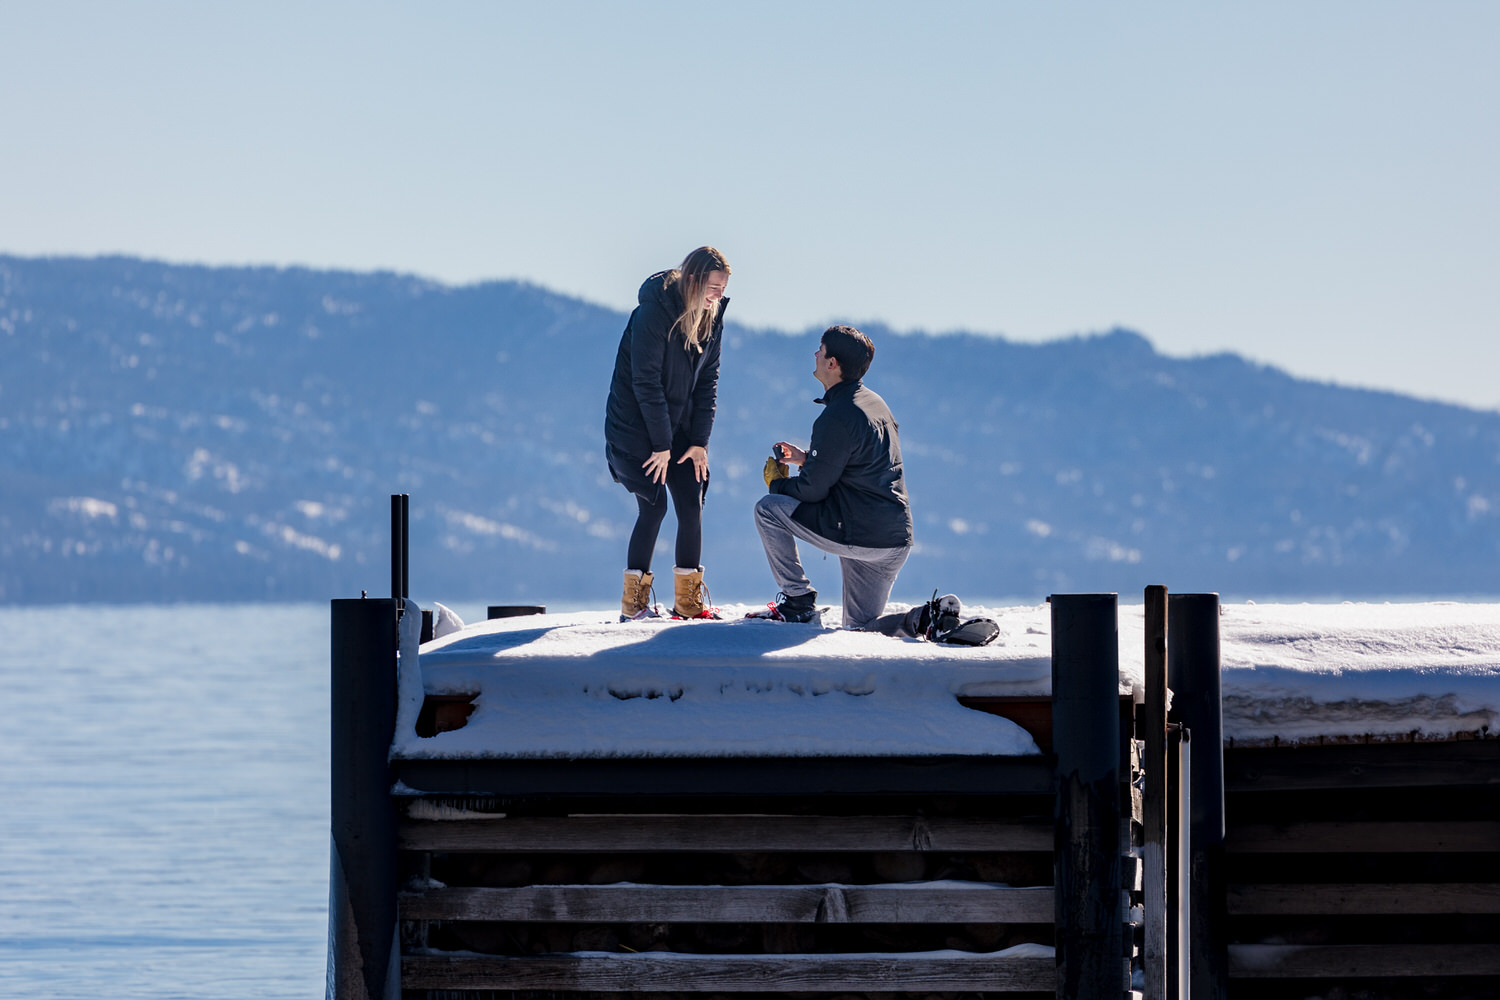 Surprise wedding proposal during winter on a lake pier.